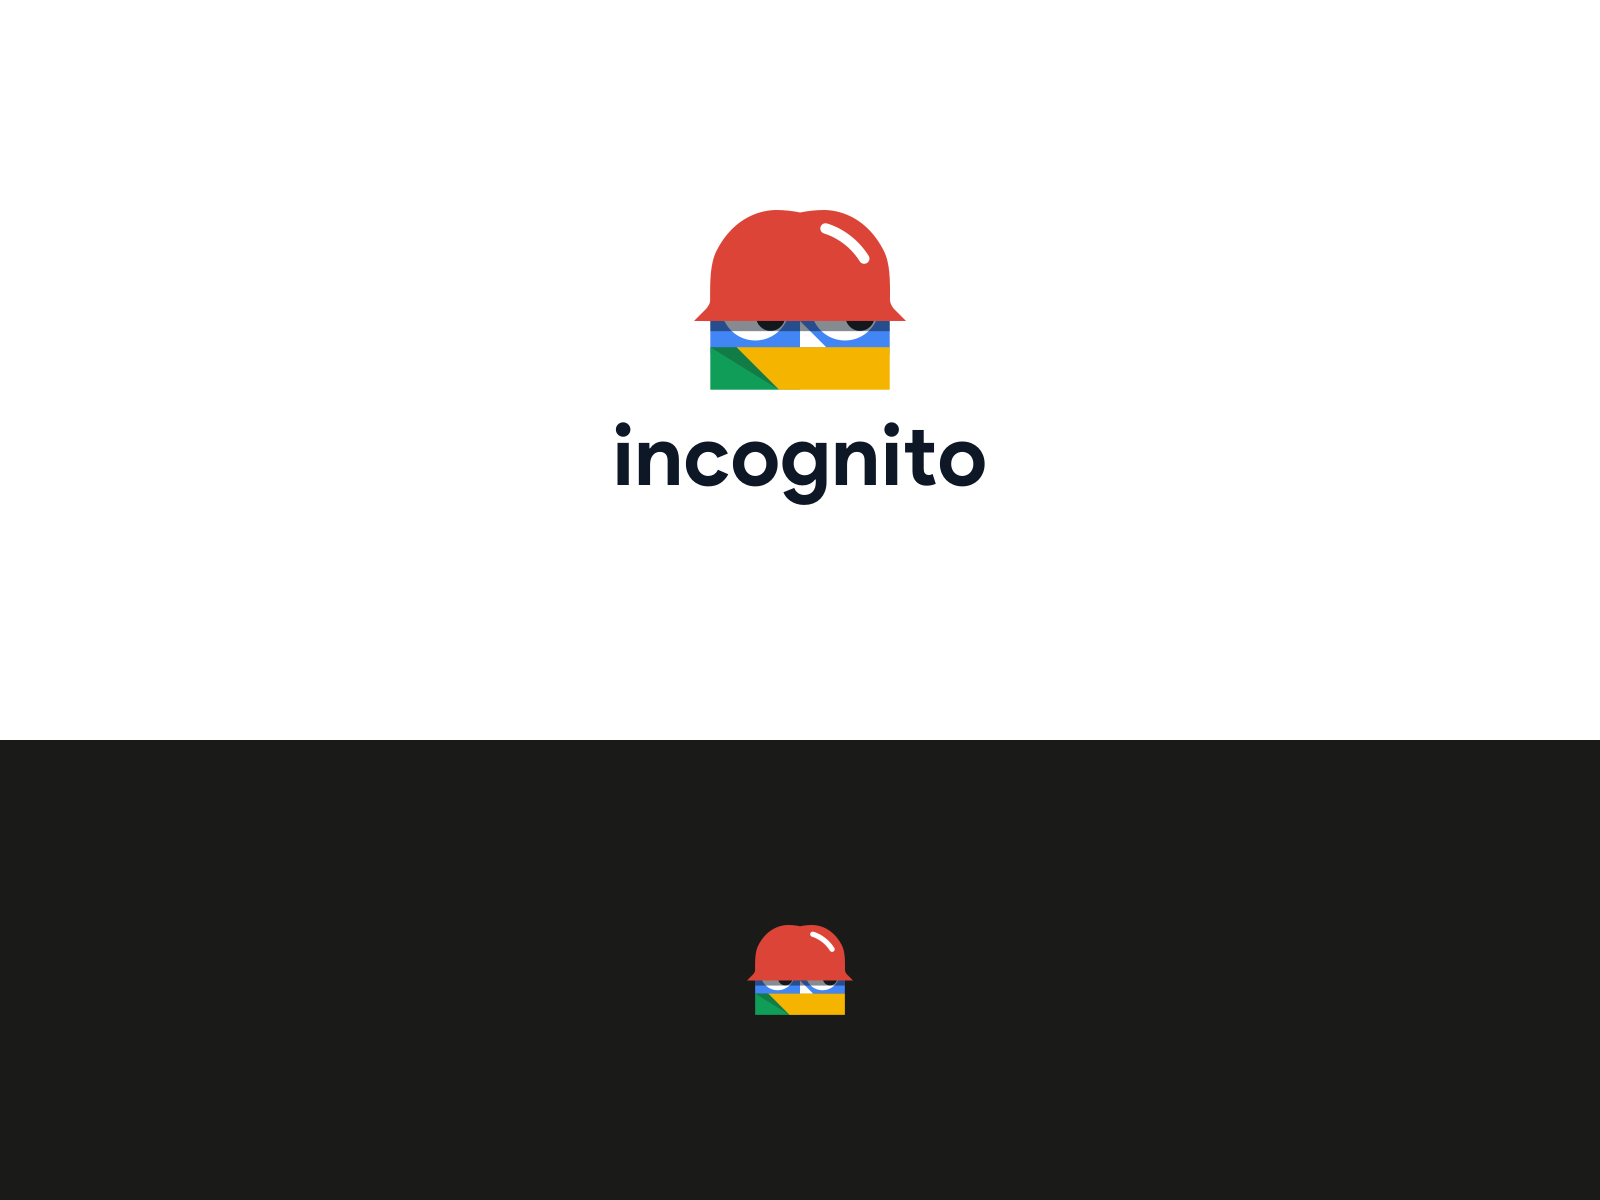 Incognito logo png | Klipartz